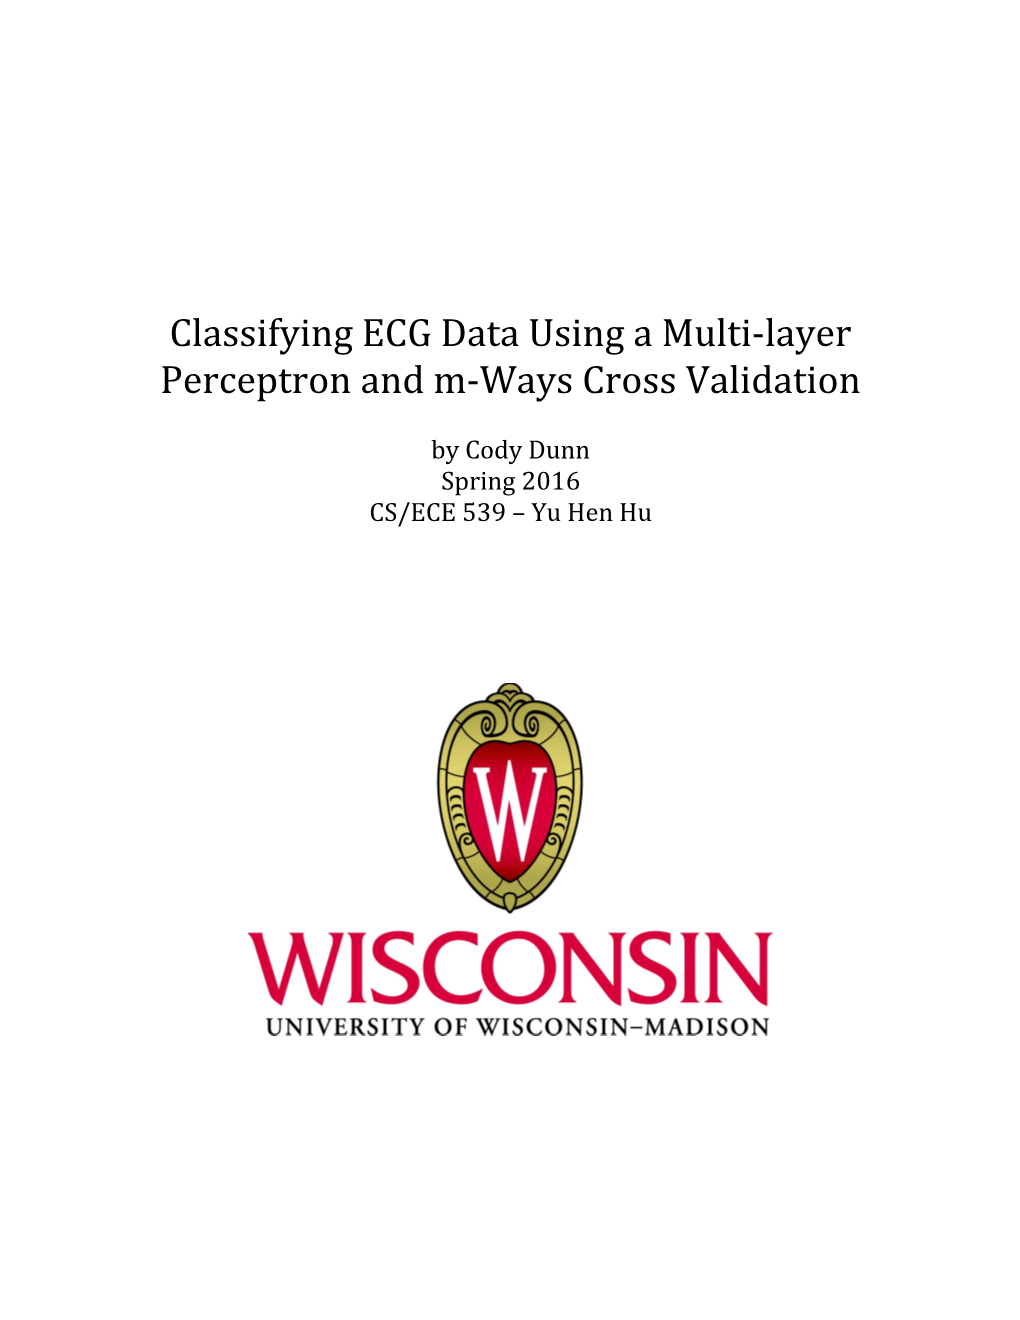 Classifying ECG Data Using a Multi-Layer Perceptron and M-Ways Cross Validation